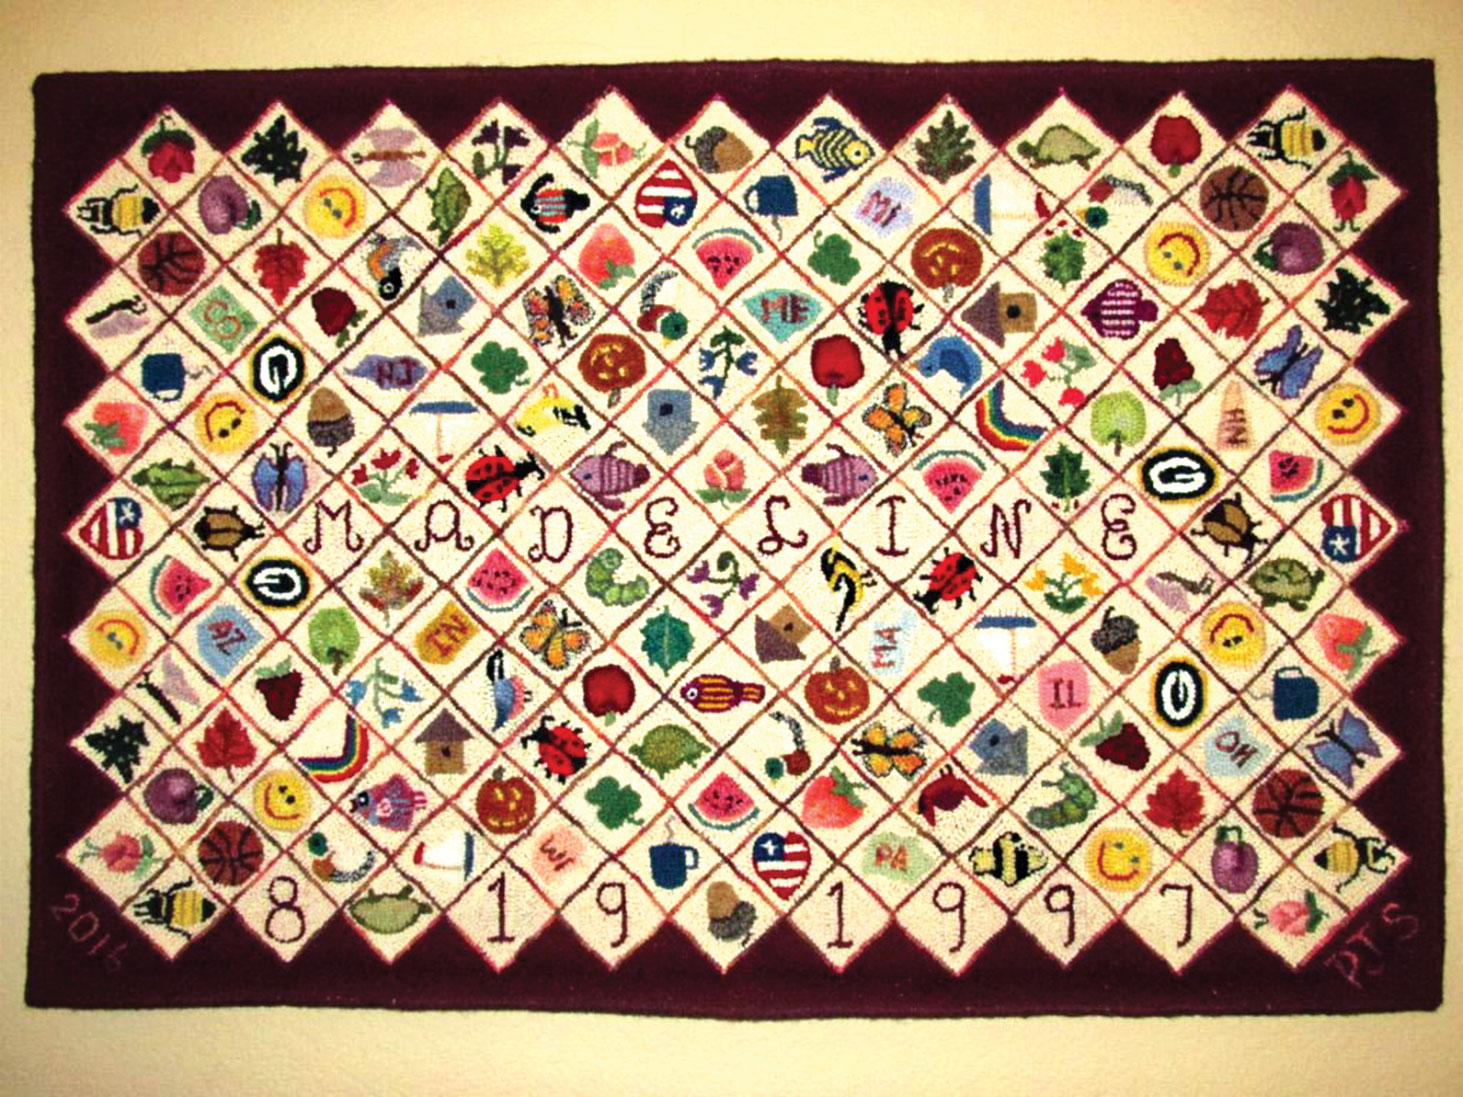 Granddaughter’s rug, Grab Bag, hooked by Priscilla Sharp